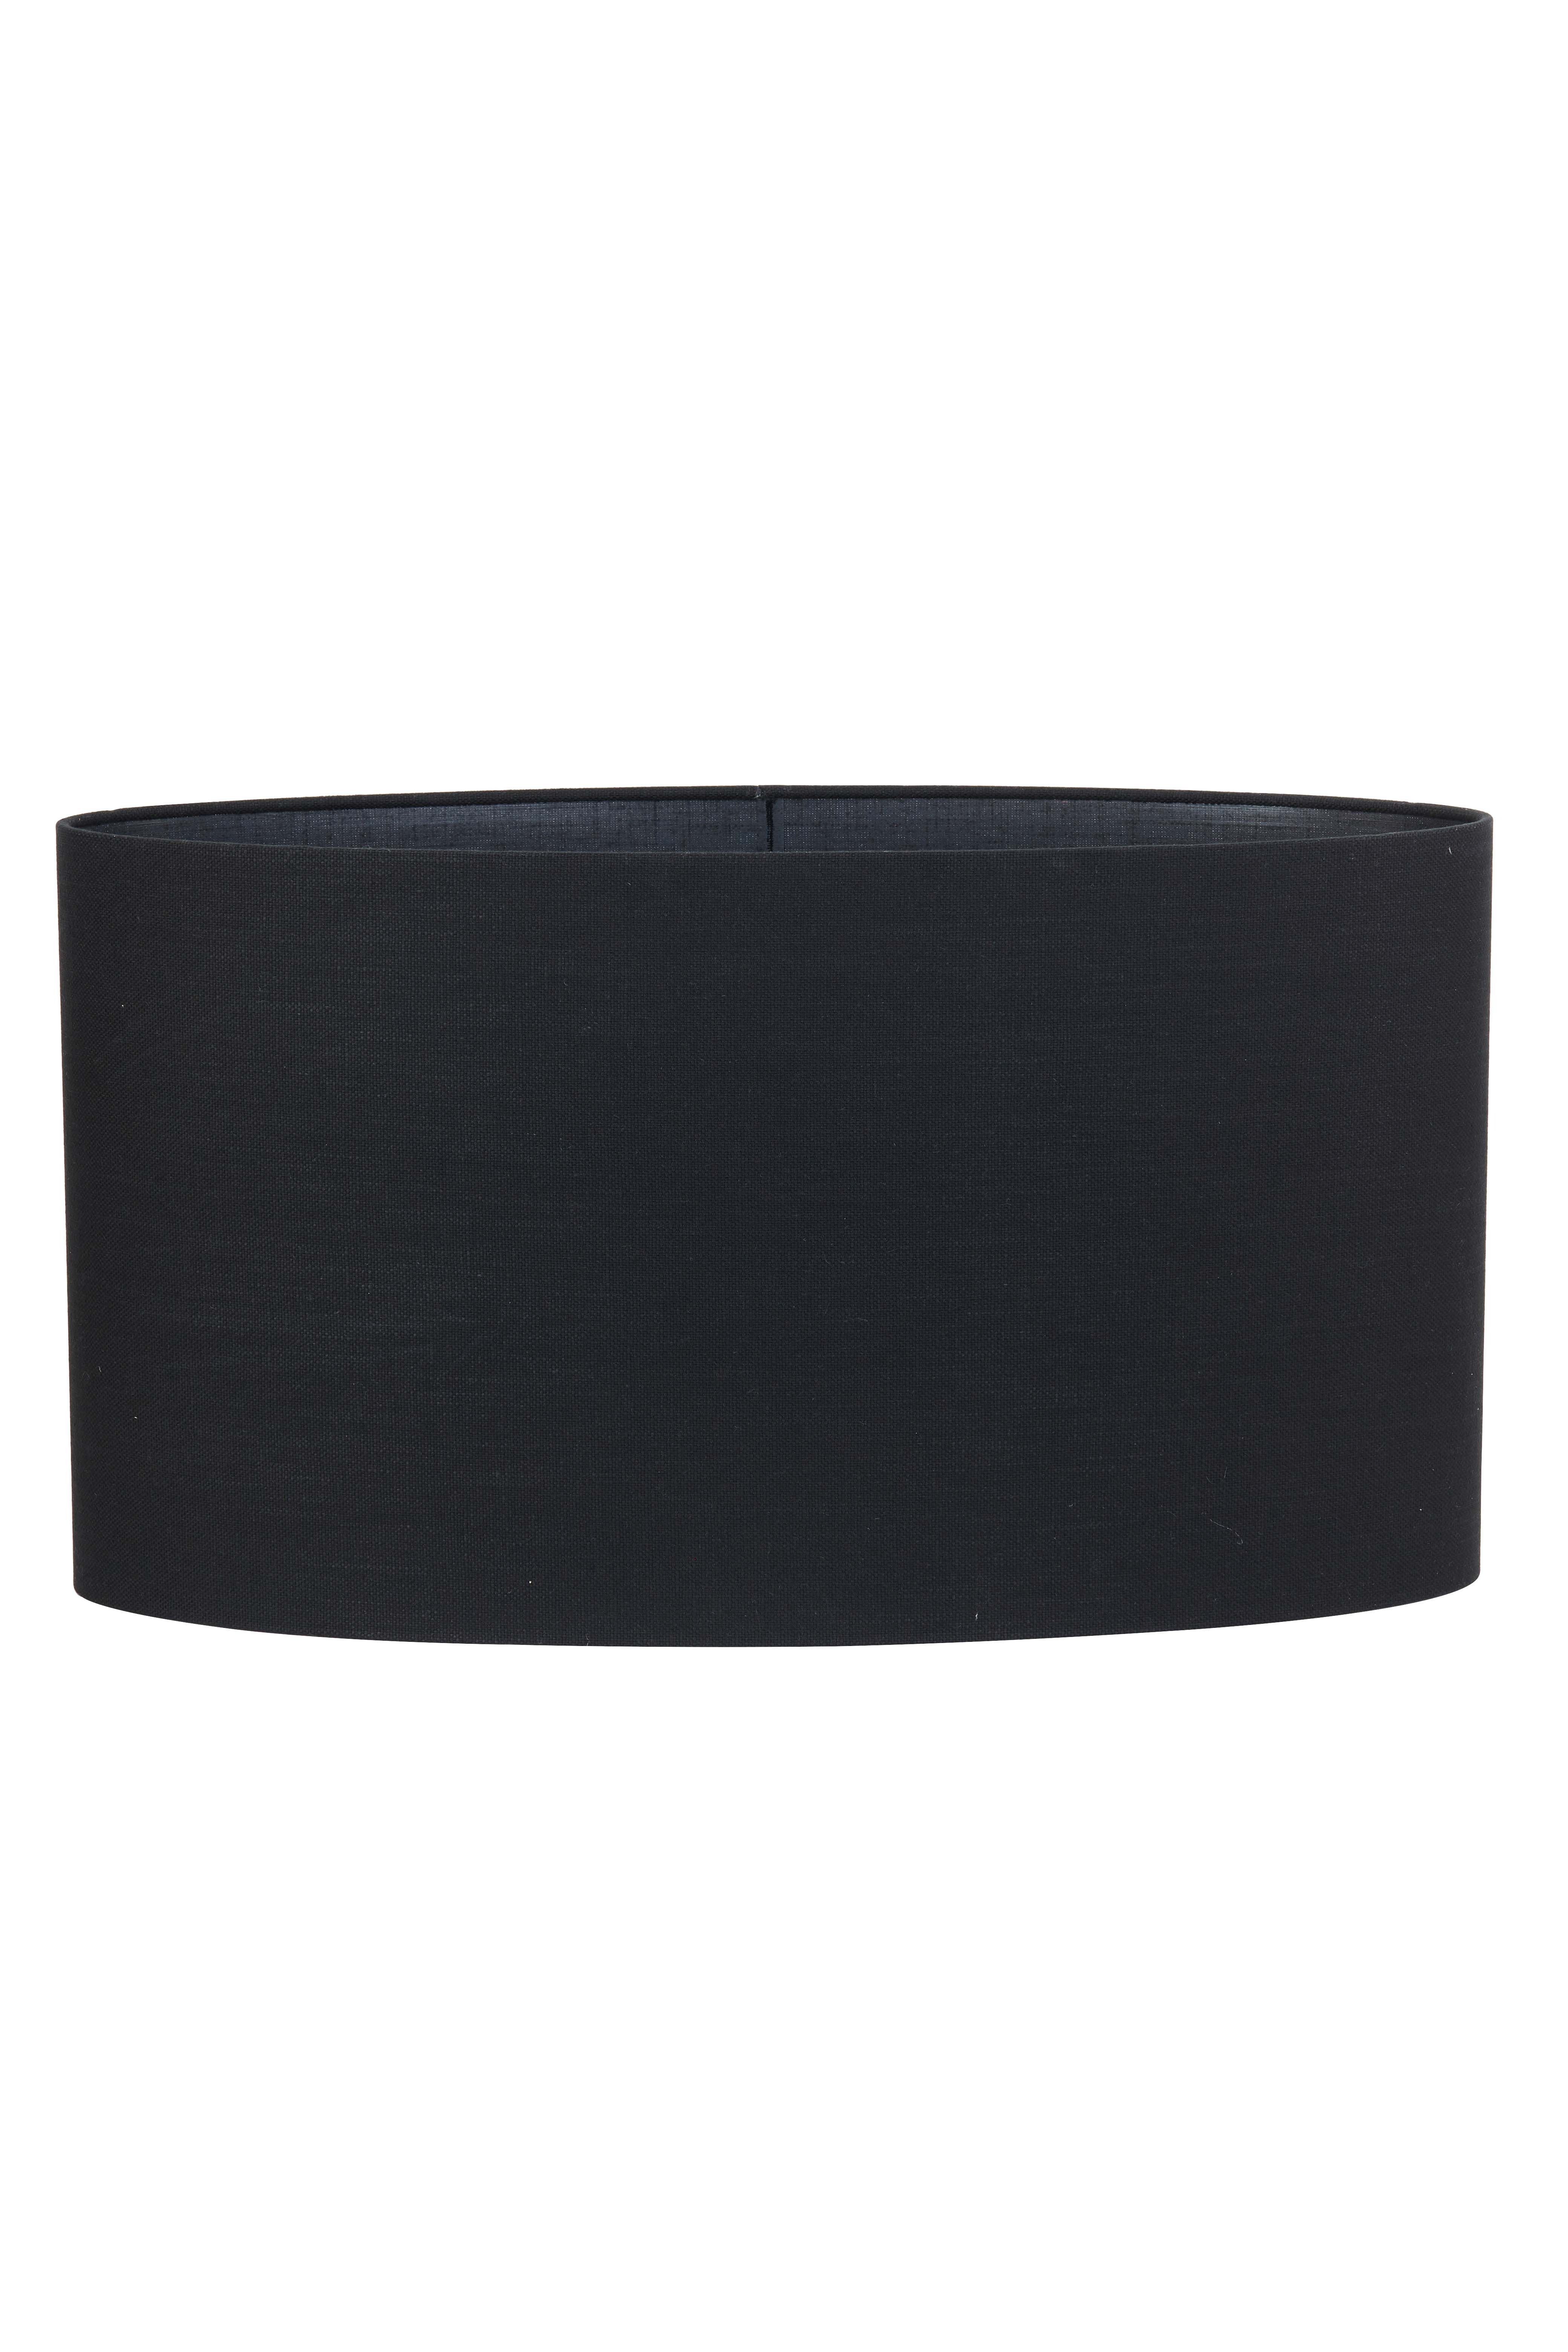 Shade oval straight slim 70-27-38 cm LIVIGNO black